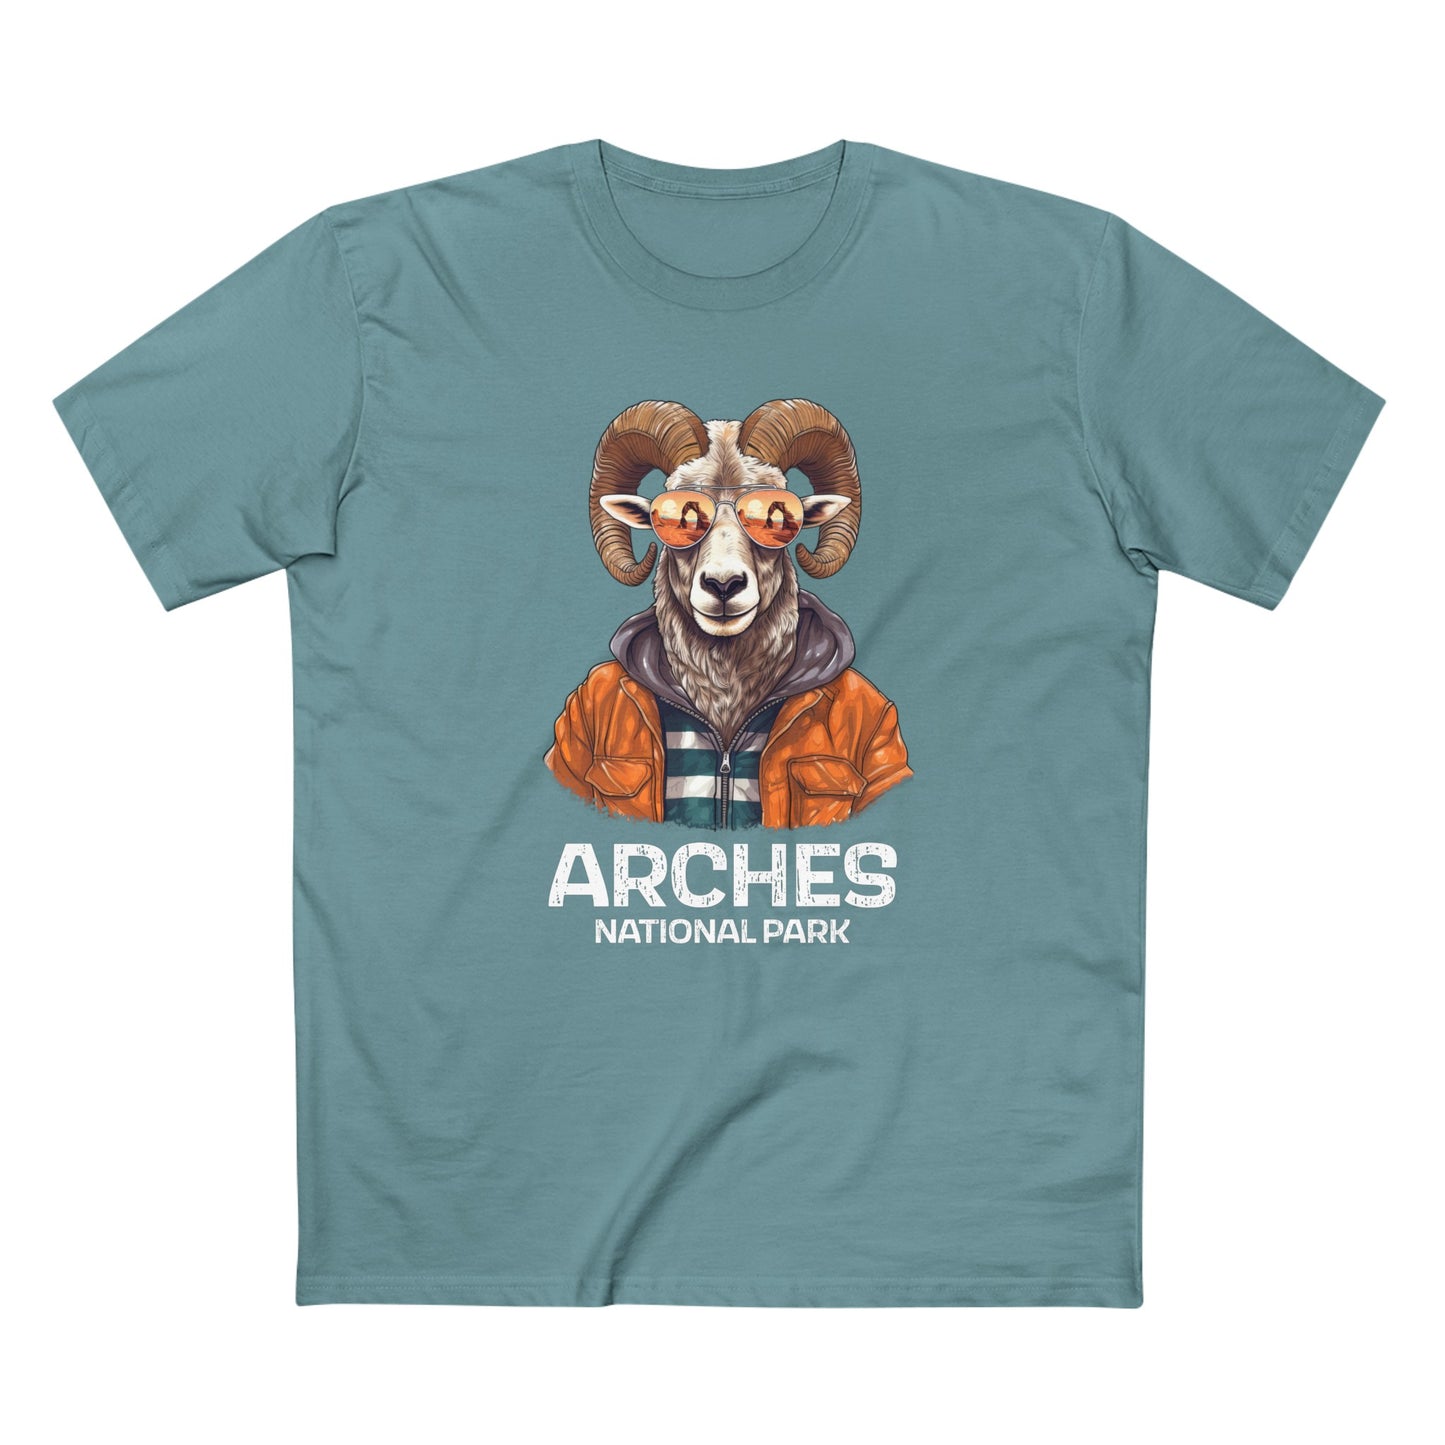 Arches National Park T-Shirt - Bighorn Sheep